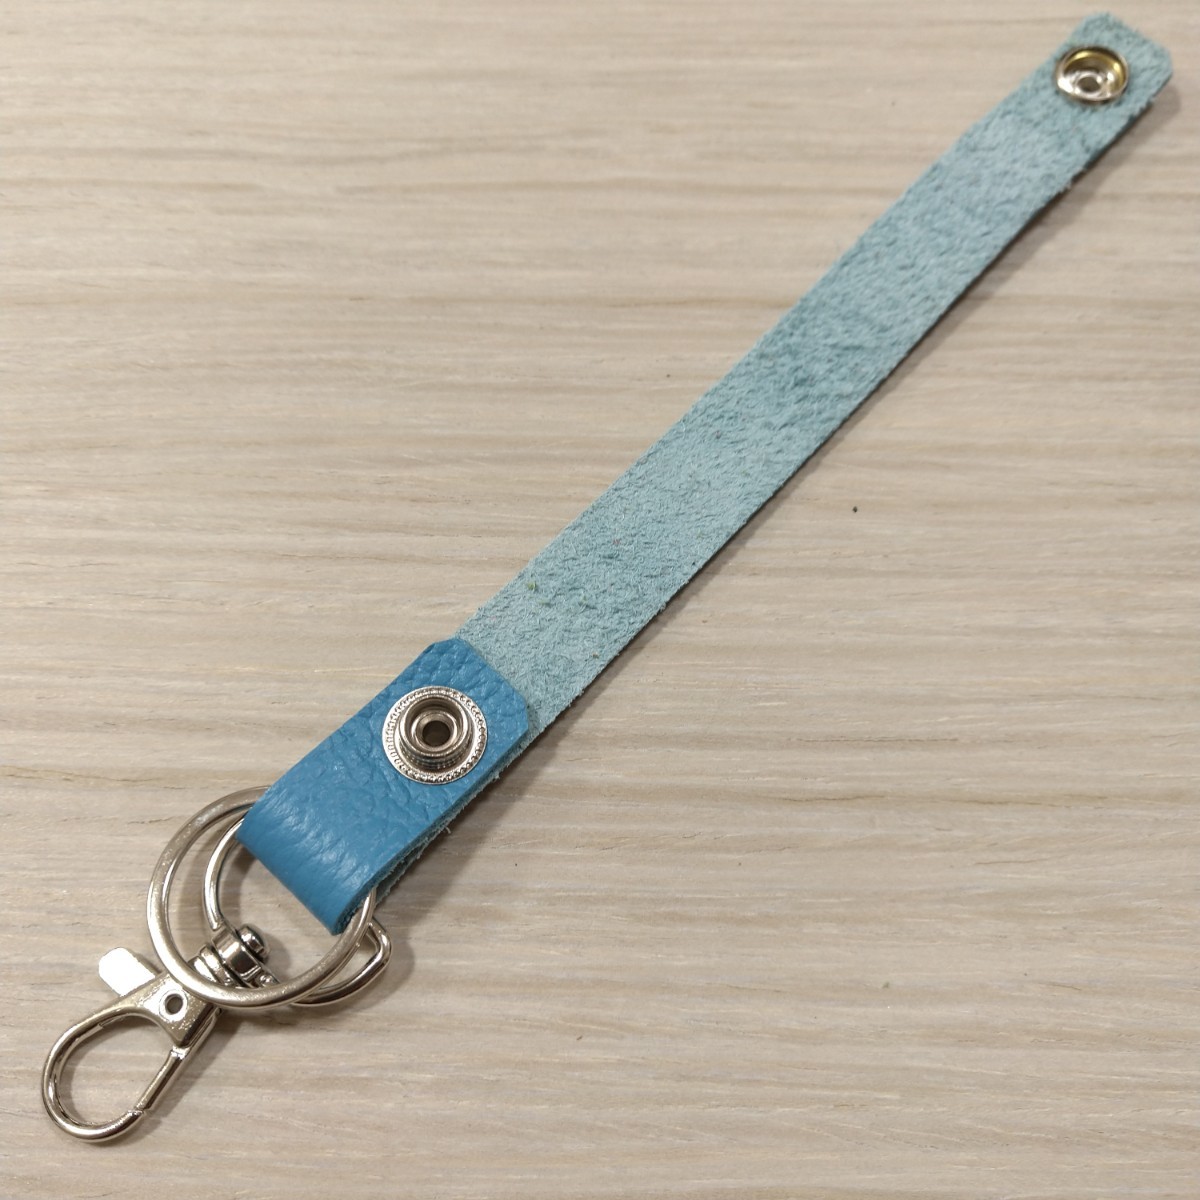  loop key holder light blue strut stop key ring leather hand made leather craft back charm belt loop outside fixed form 